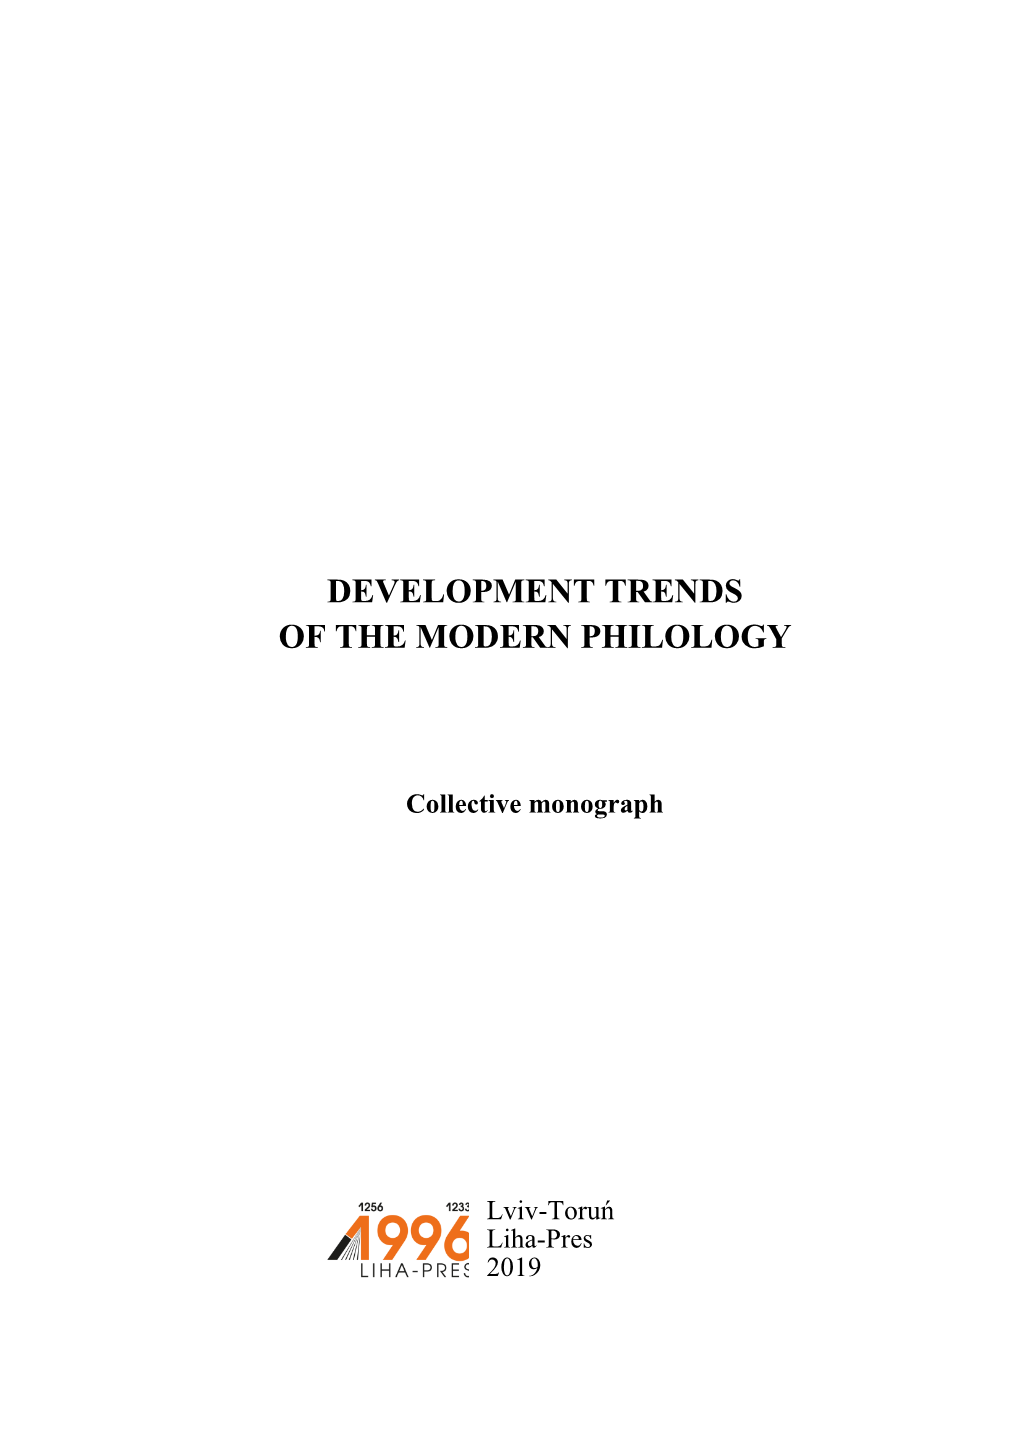 Development Trends of the Modern Philology